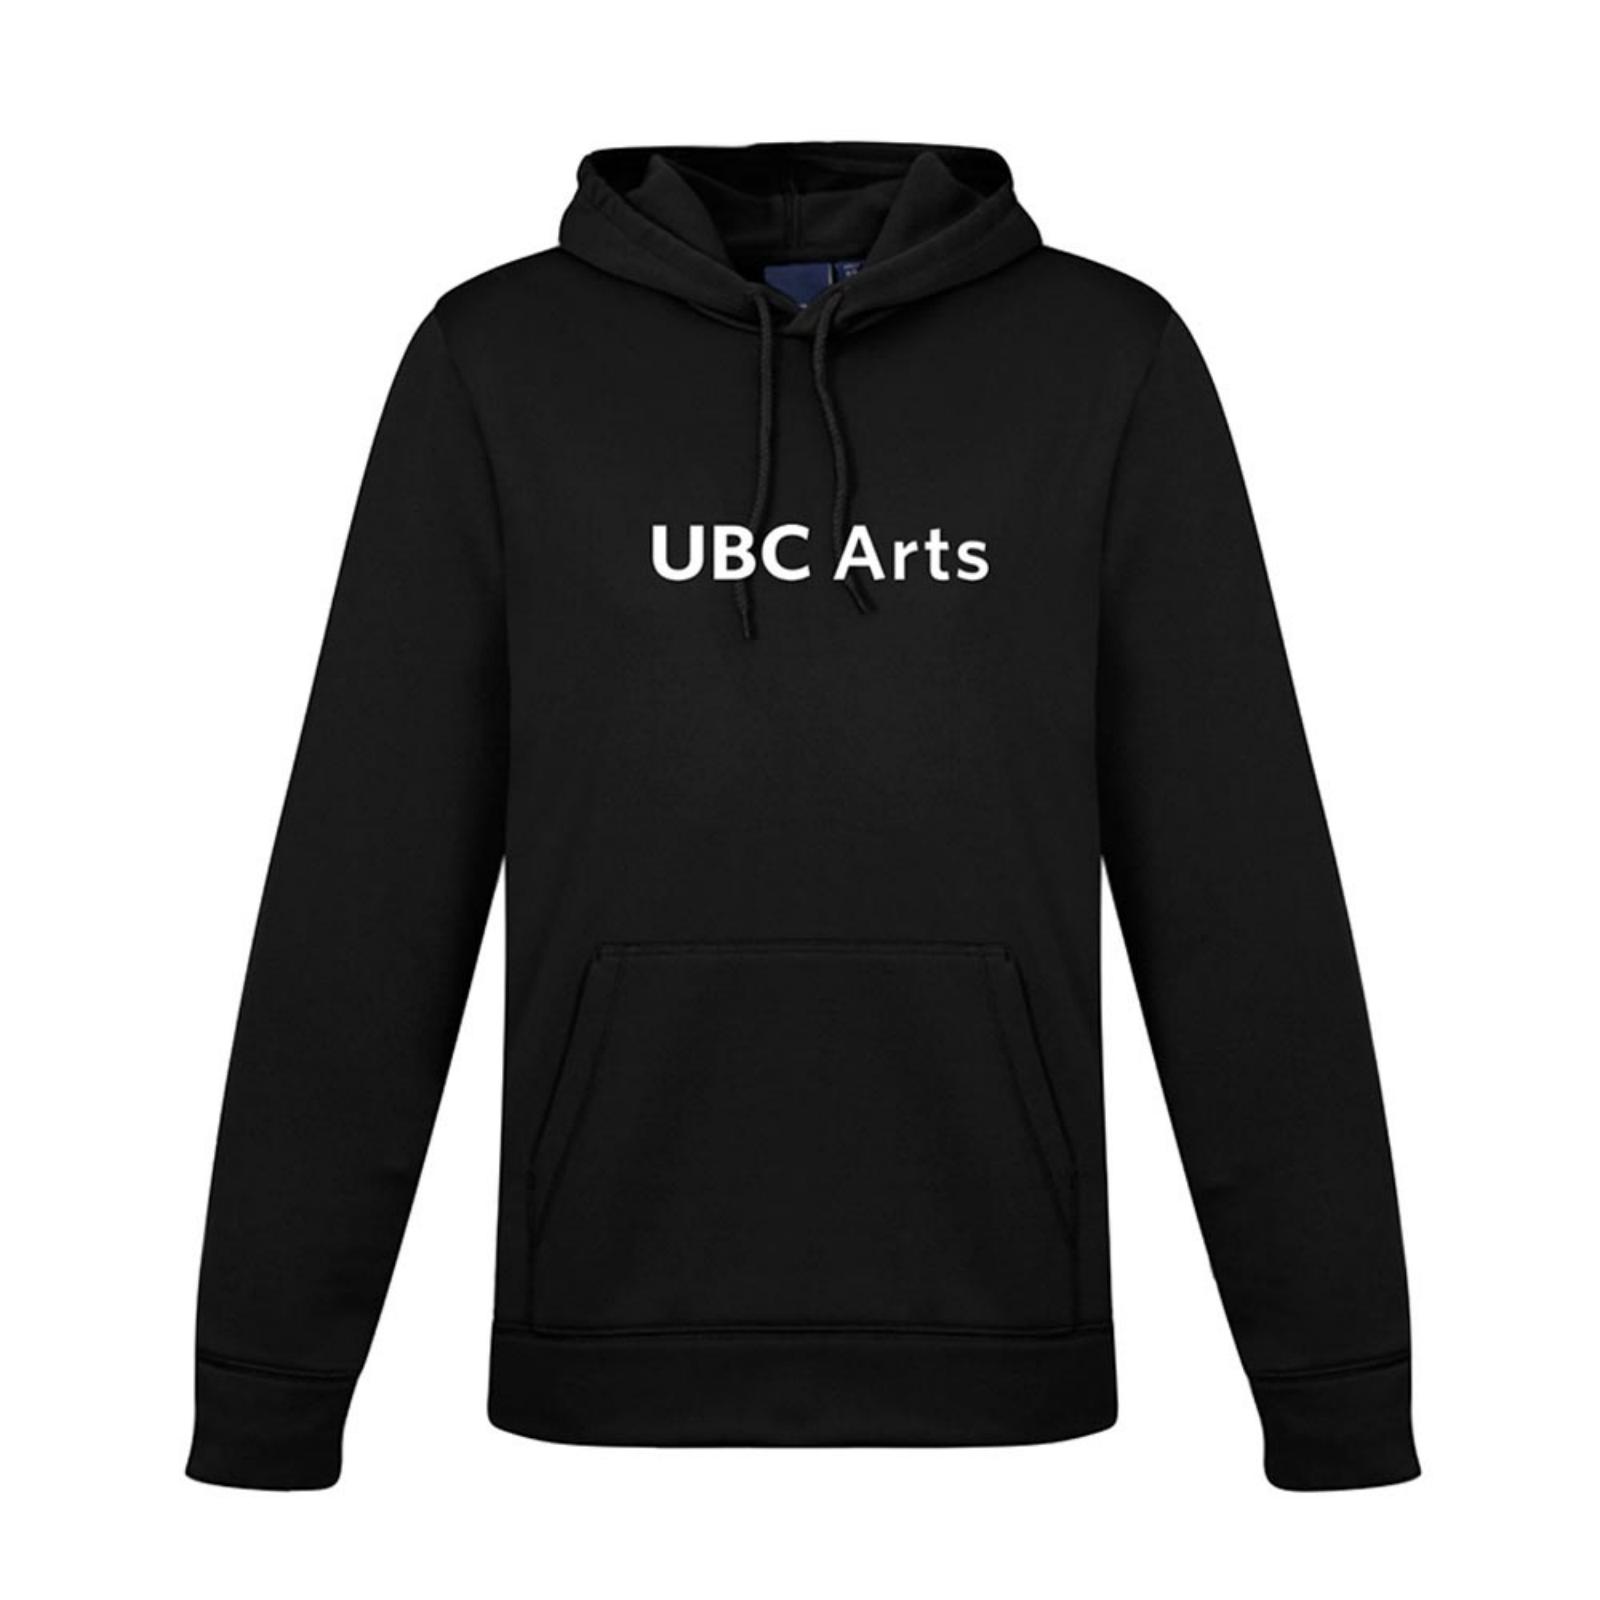 ARTS Men's Performance Hoodie with Screenprinted UBC Arts Logo, Black